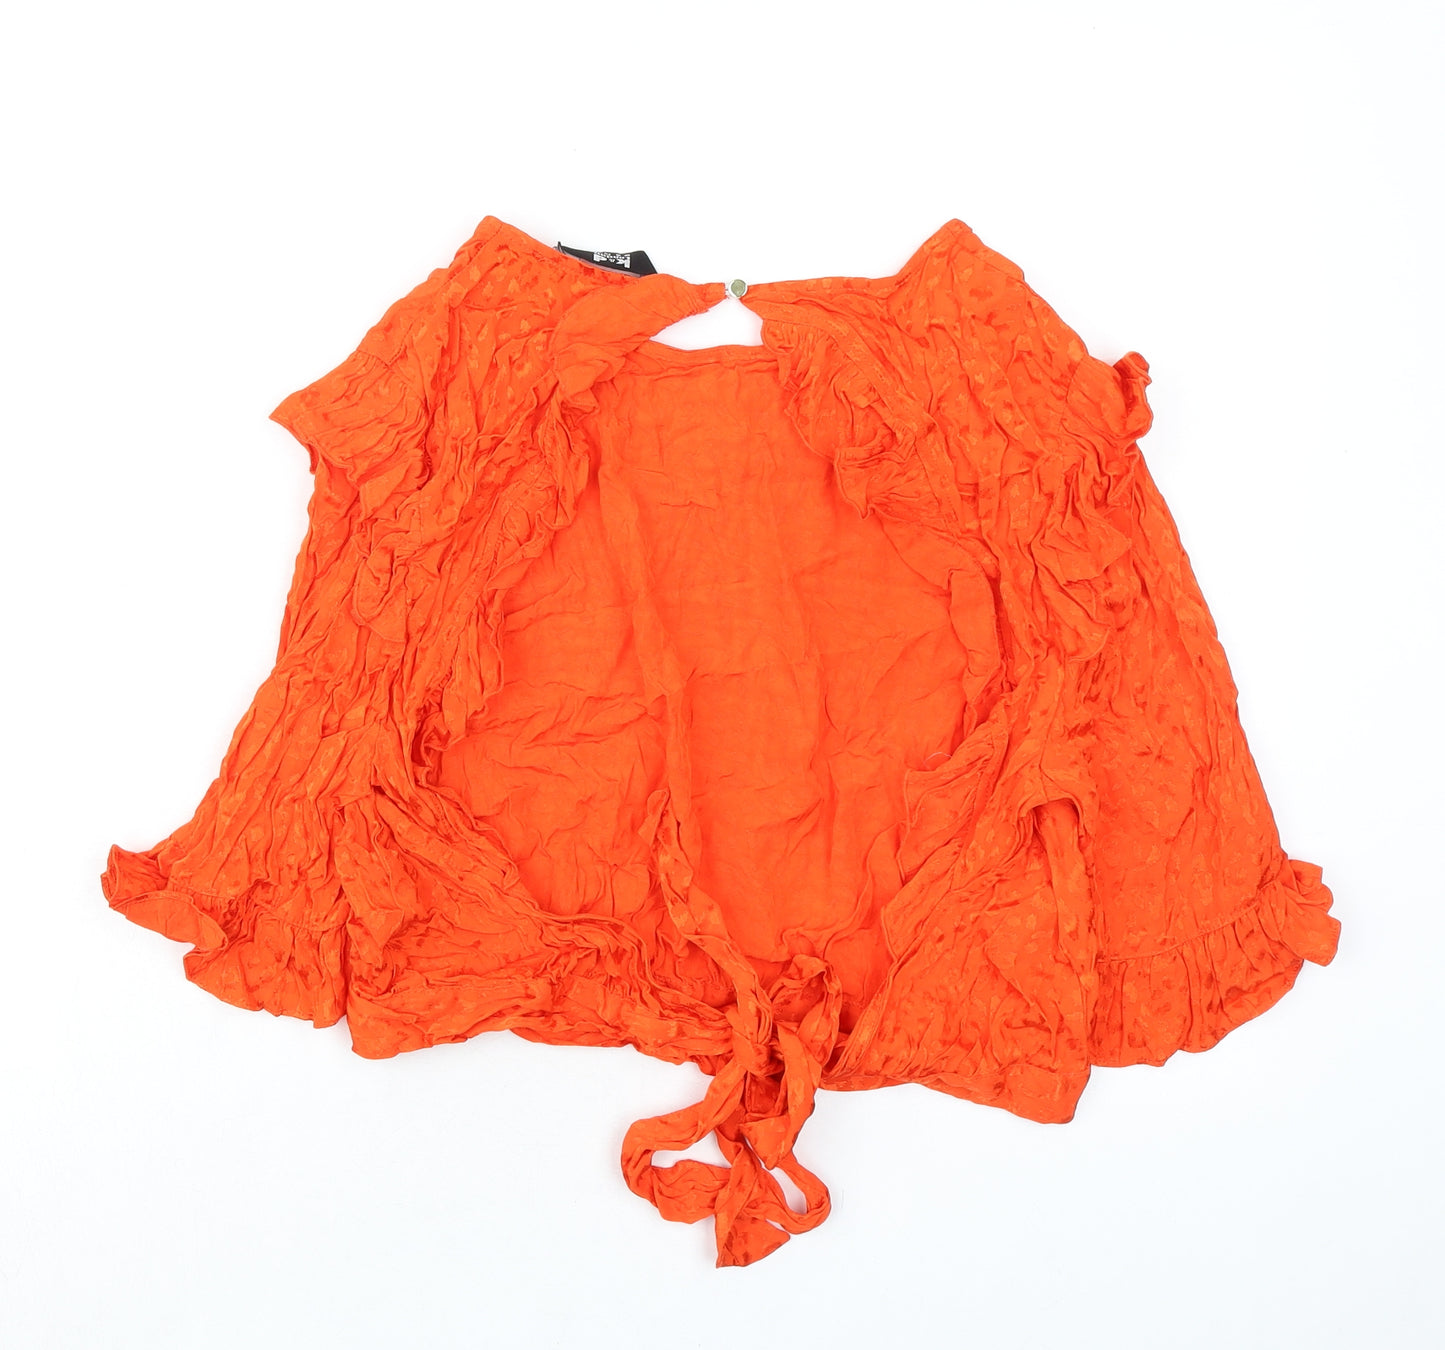 K&D Womens Orange Animal Print Viscose Basic Blouse Size 16 Round Neck - Open Back Leopard Print